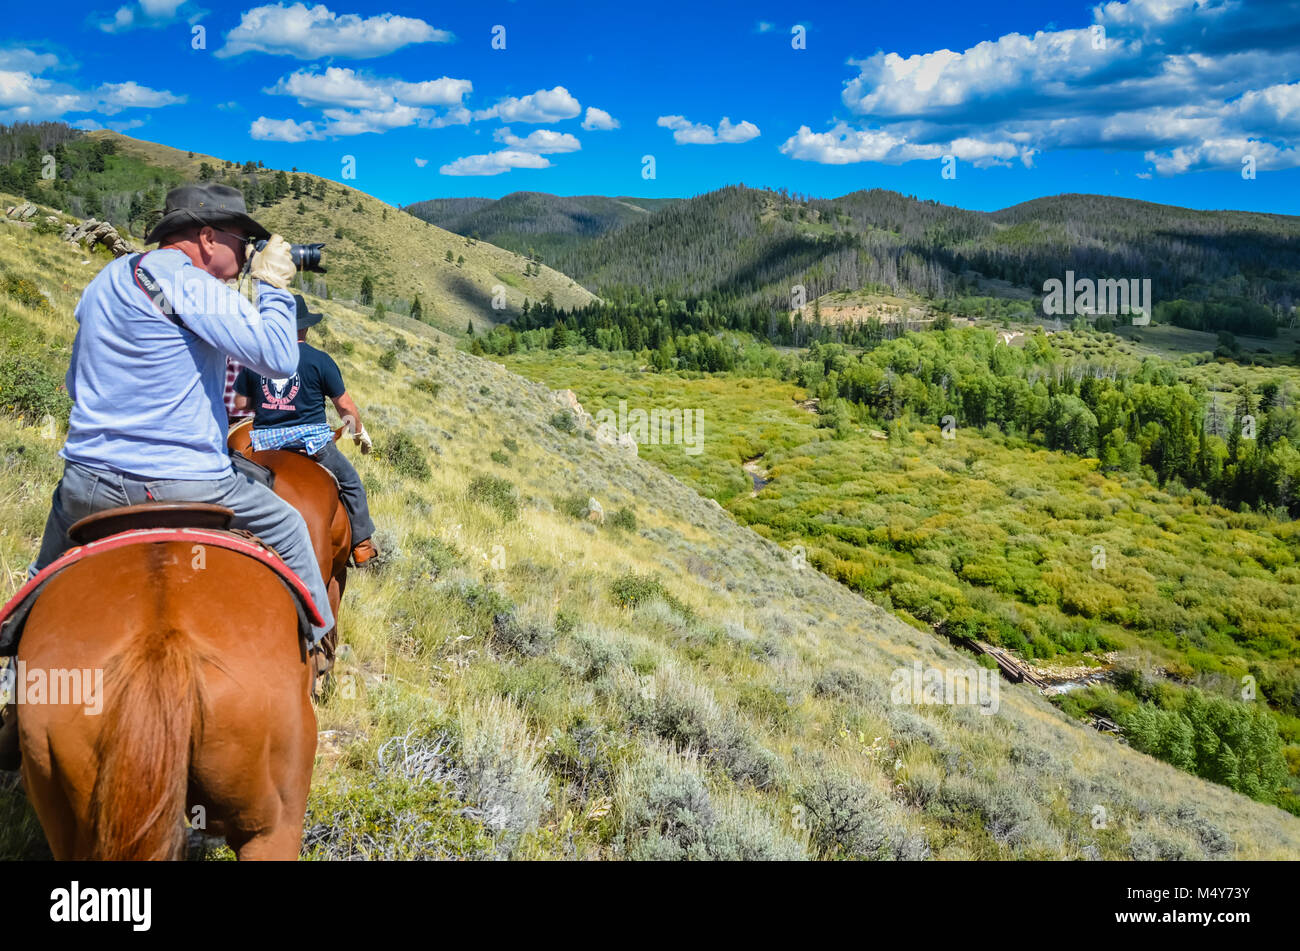 Un hombre se enfoca una cámara, mientras que a horcajadas sobre un caballo, por un camino de montaña en Medicine Bow National Forest. Foto de stock